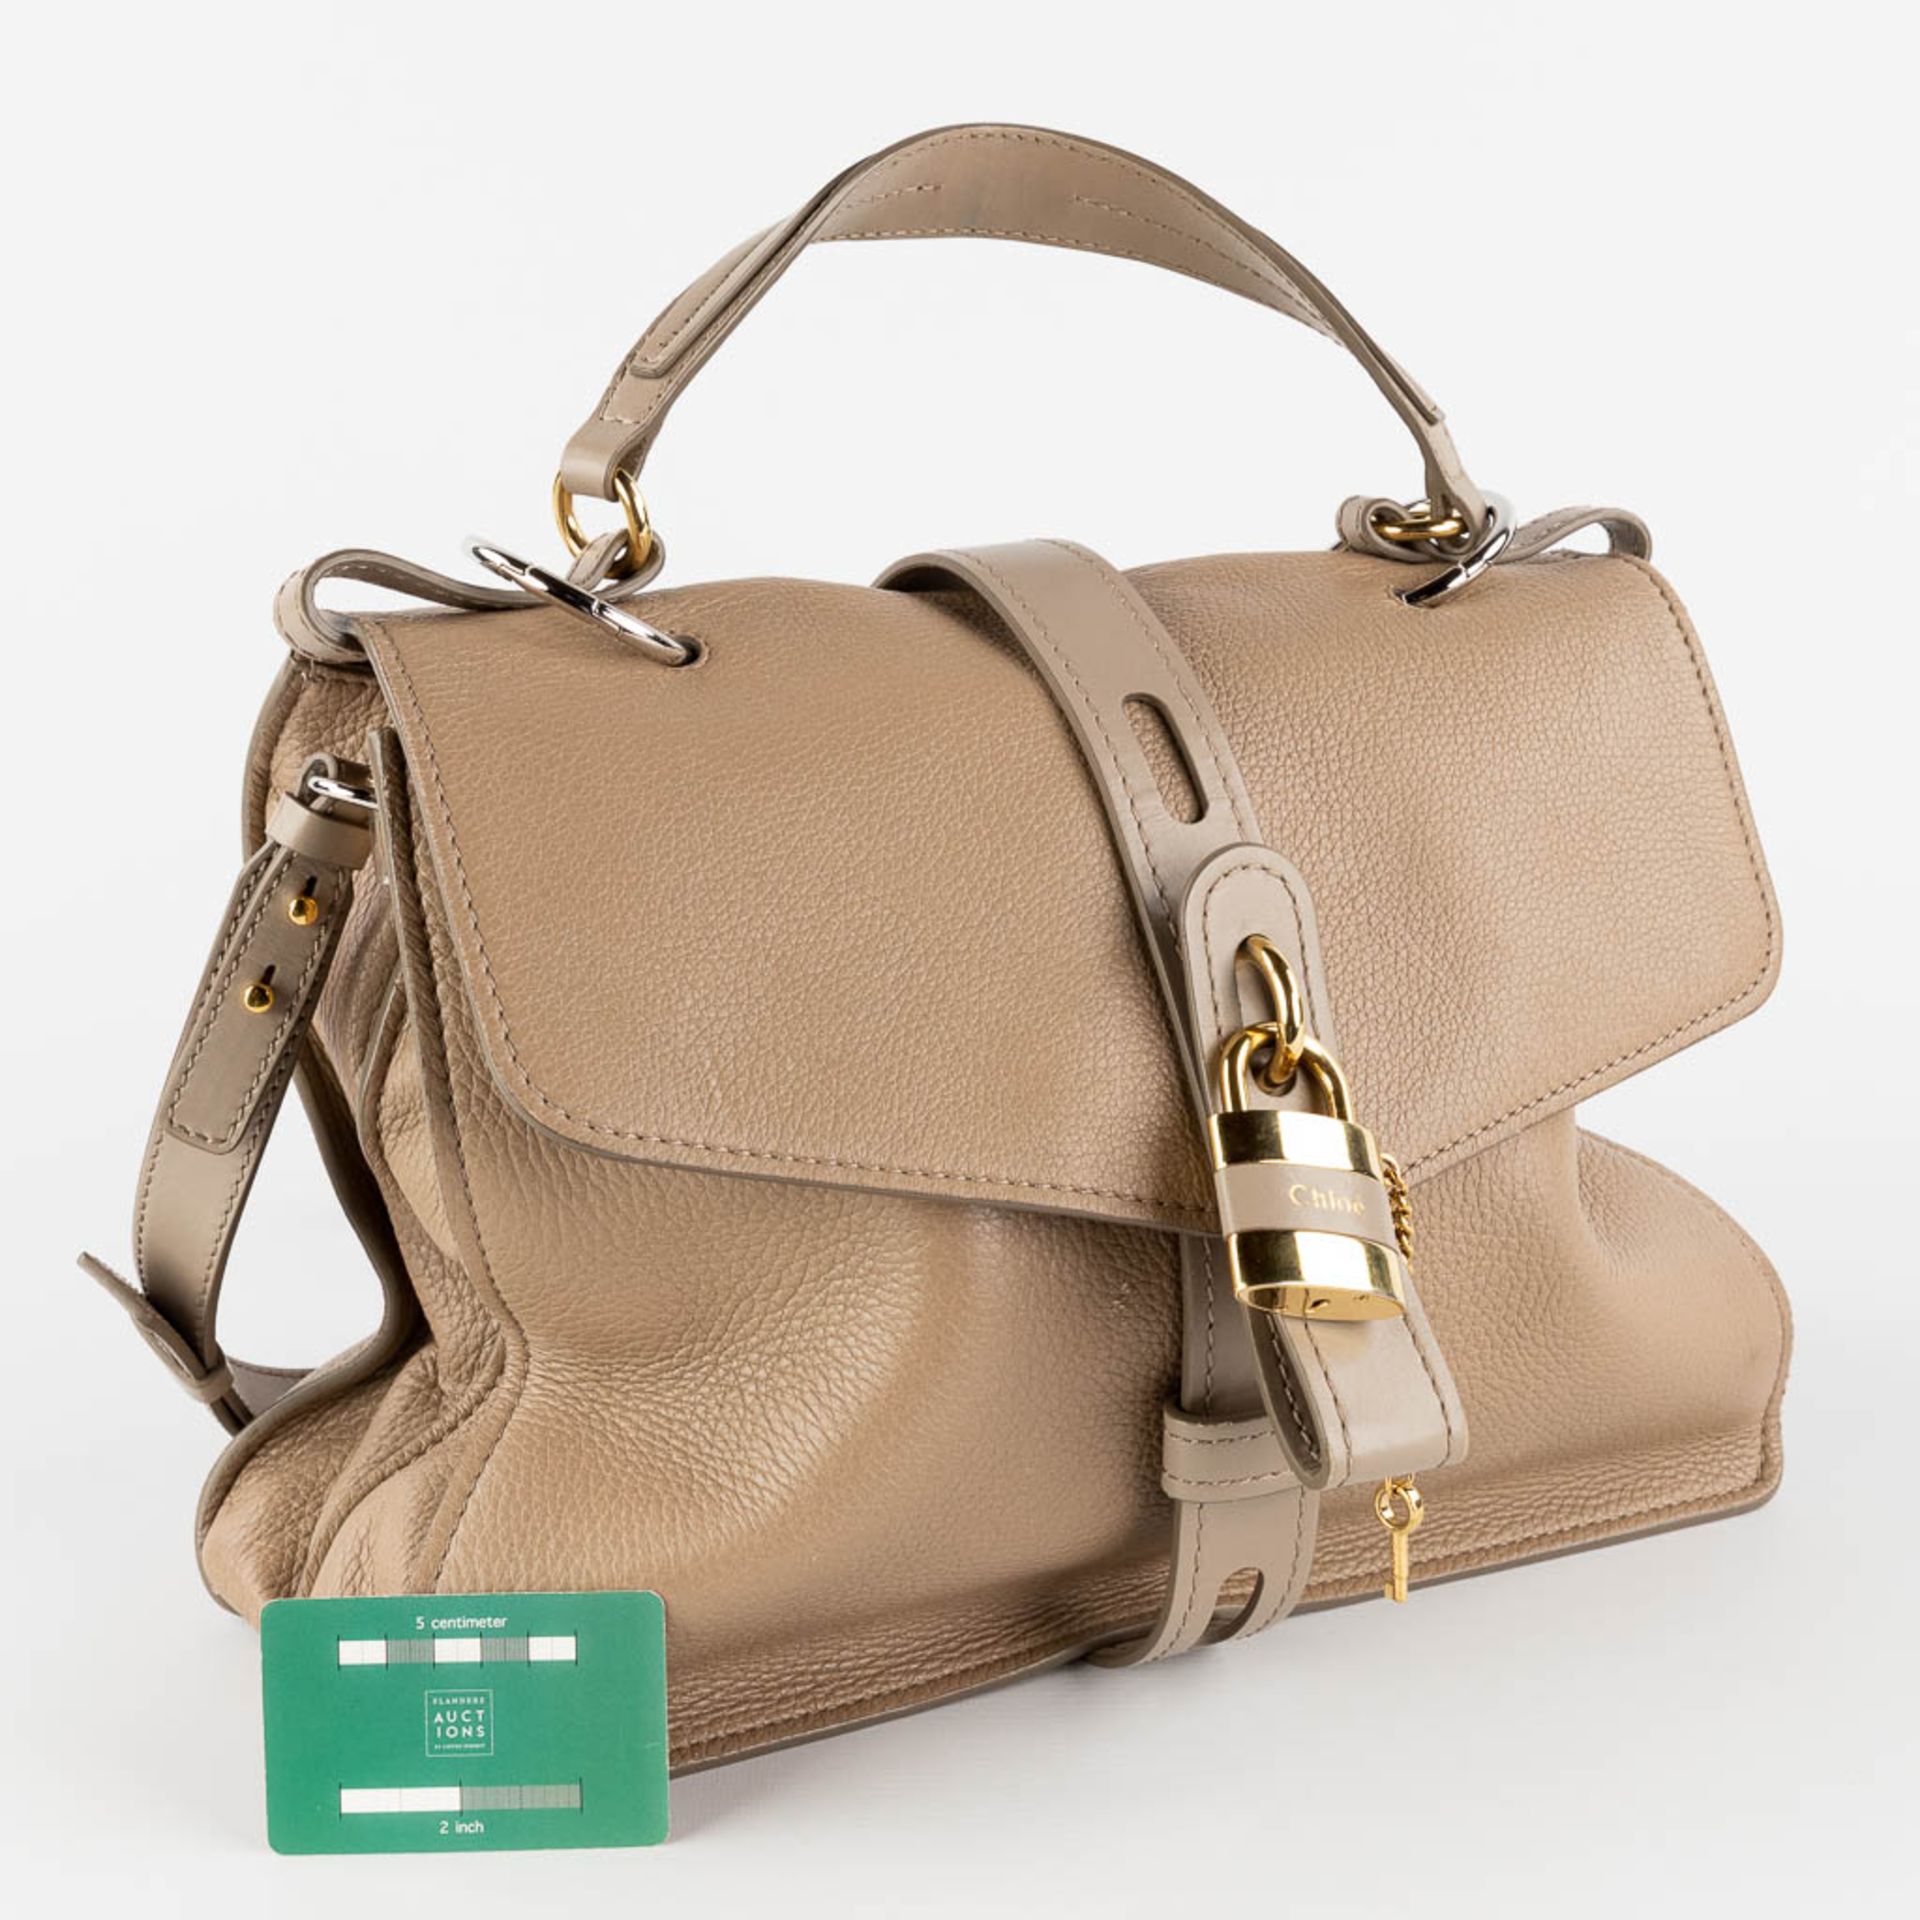 Chloé, a handbag made of brown leather. (W:38 x H:32 cm) - Image 2 of 19